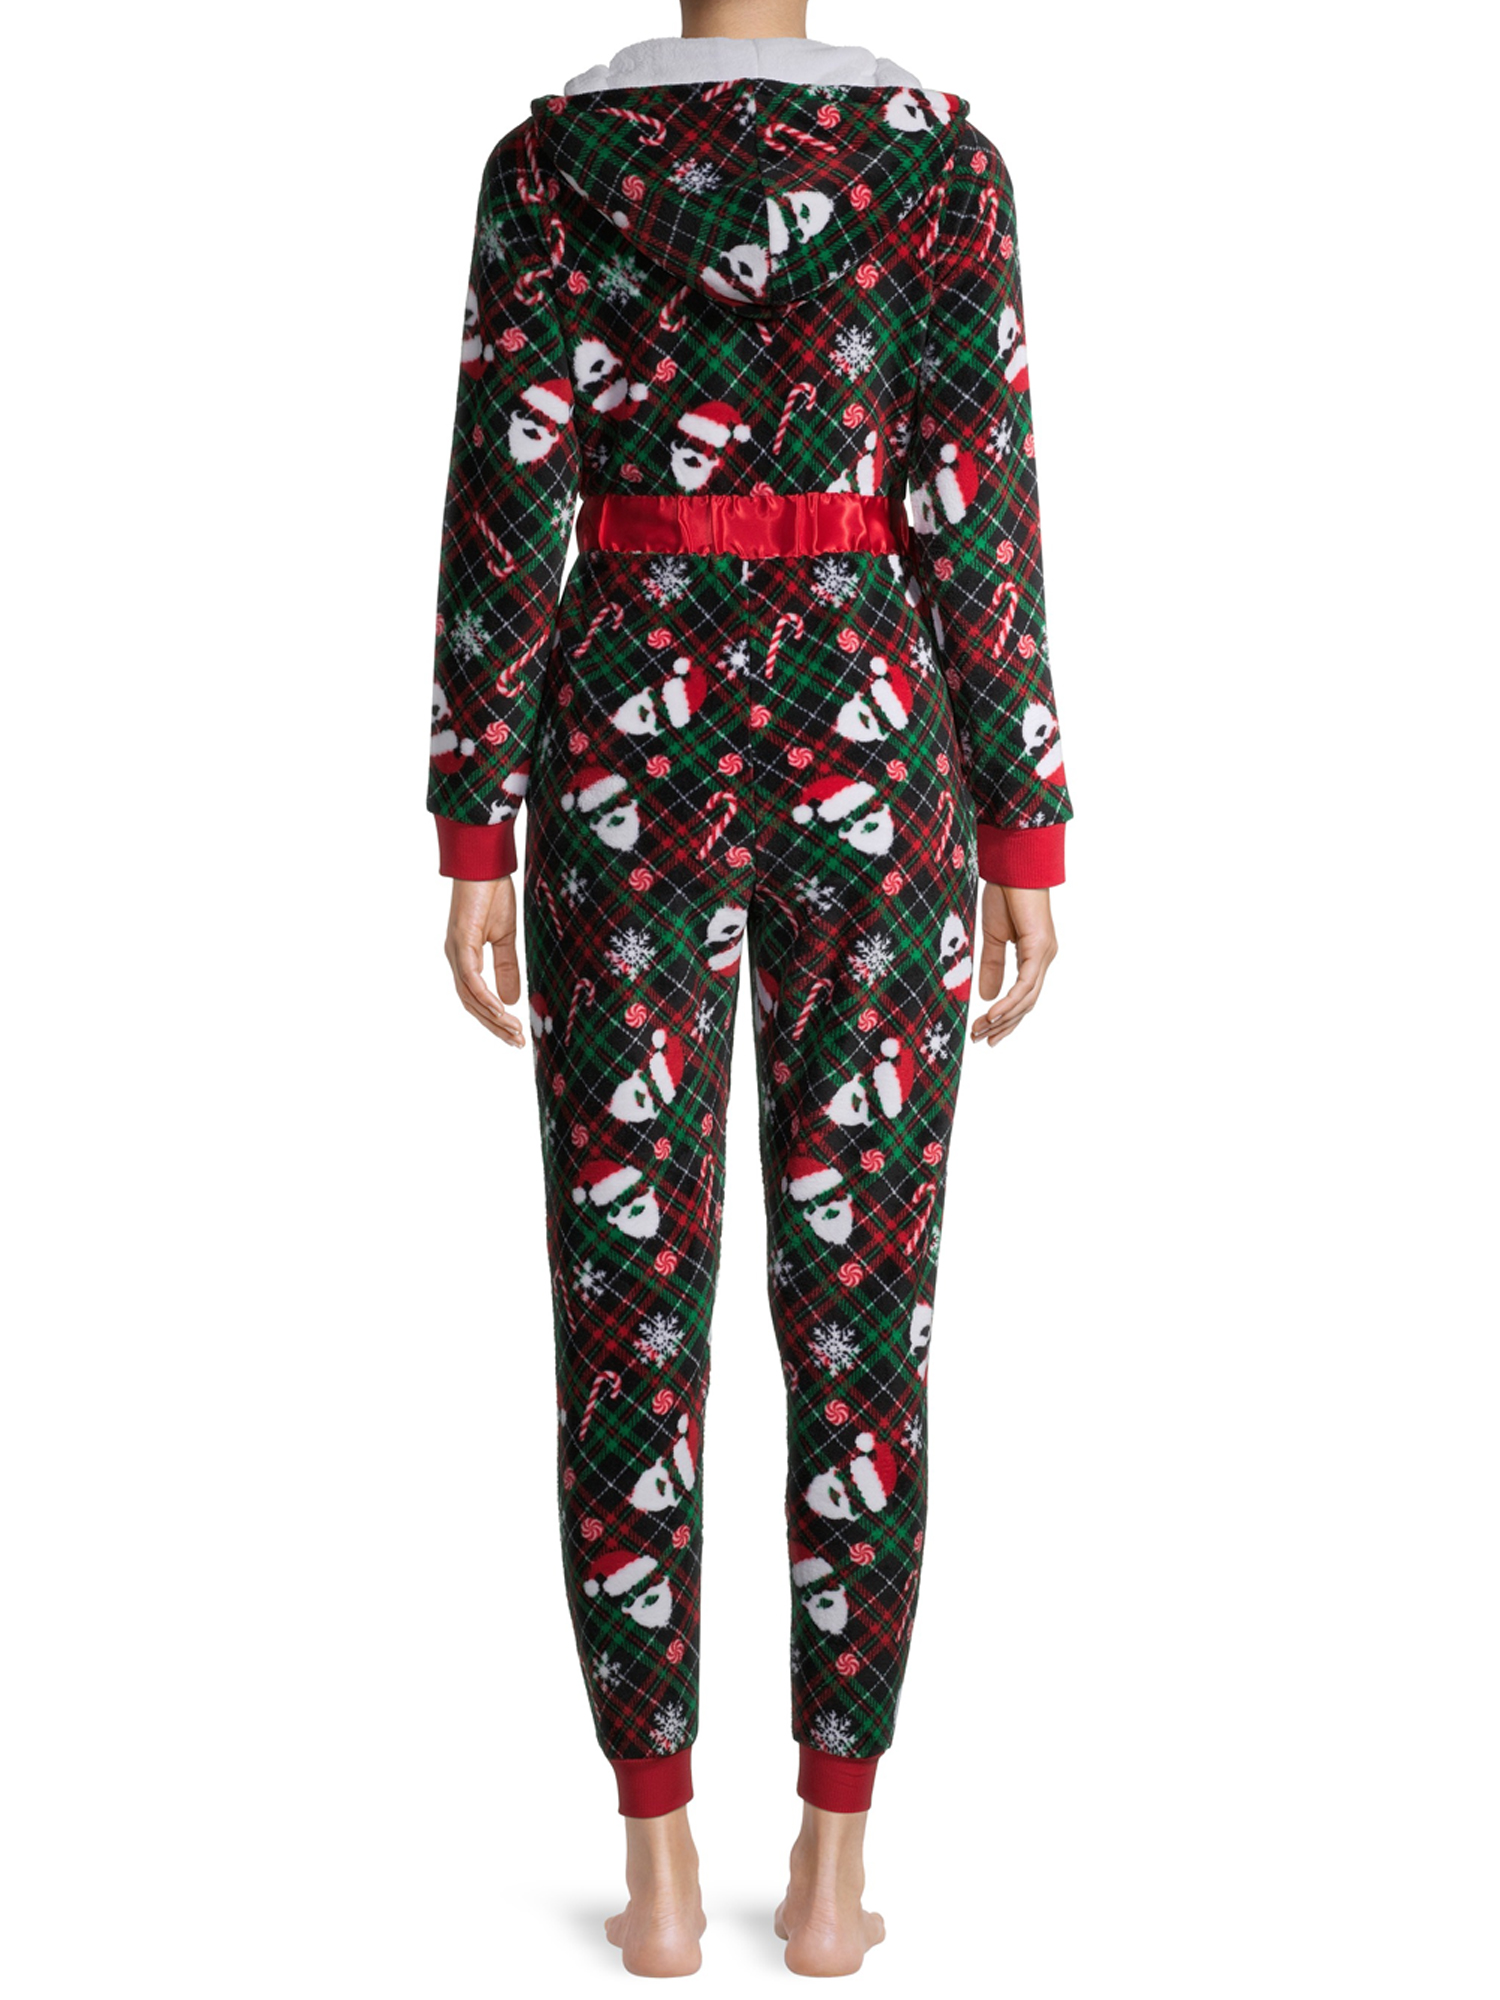 Derek Heart Women's and Women's Plus Christmas Present Pajamas Union Suit - image 2 of 6